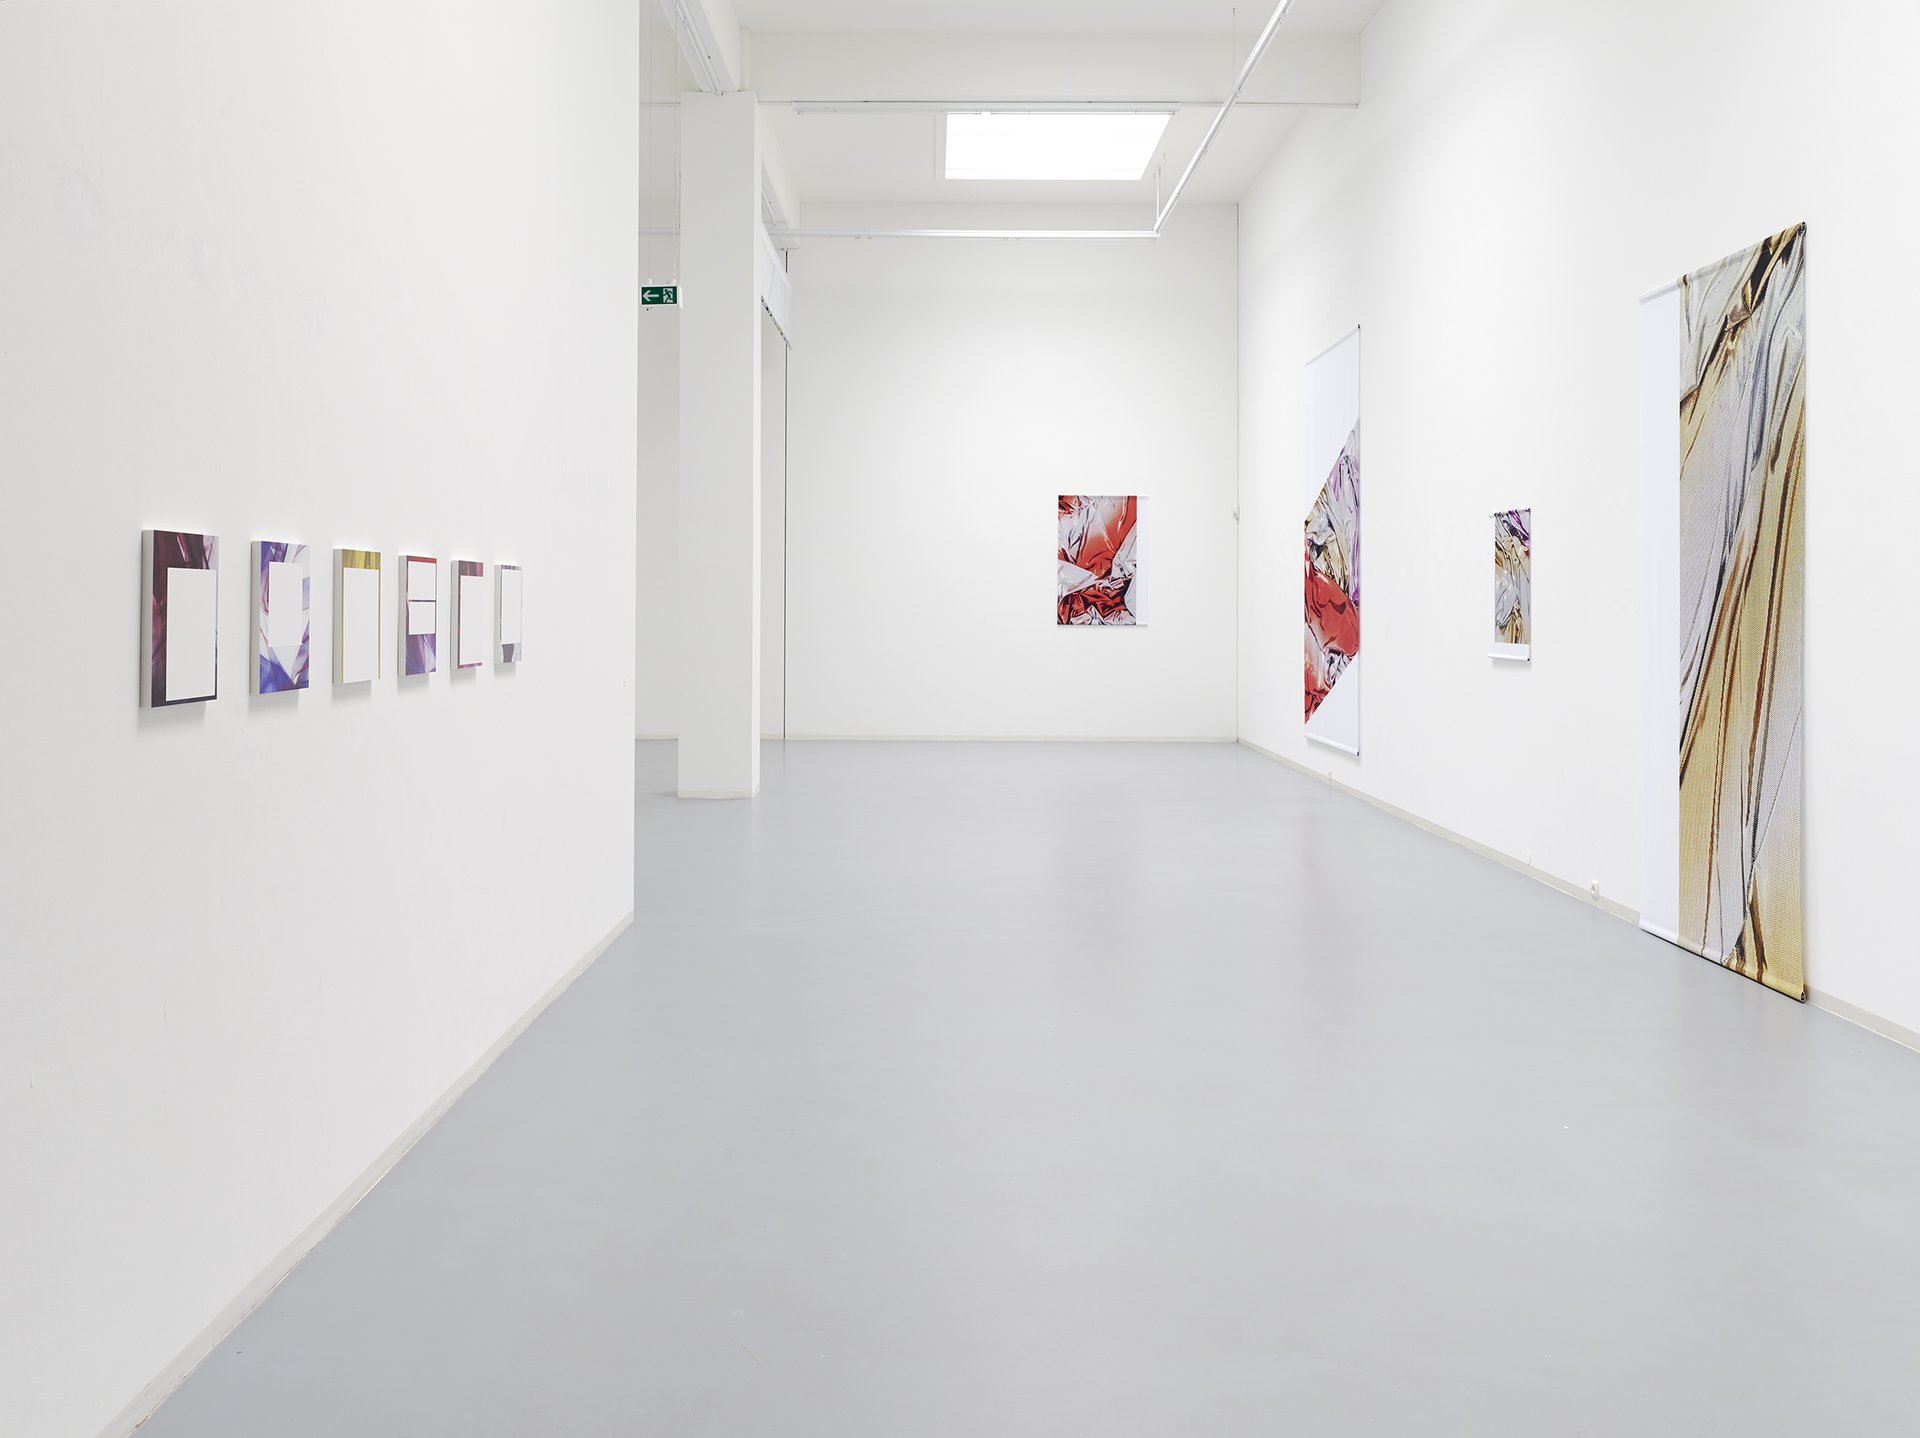 Anne Pöhlmann, installation view, 2014, Bonner Kunstverein. Courtesy the artist and Clages, Cologne. Photo: Simon Vogel